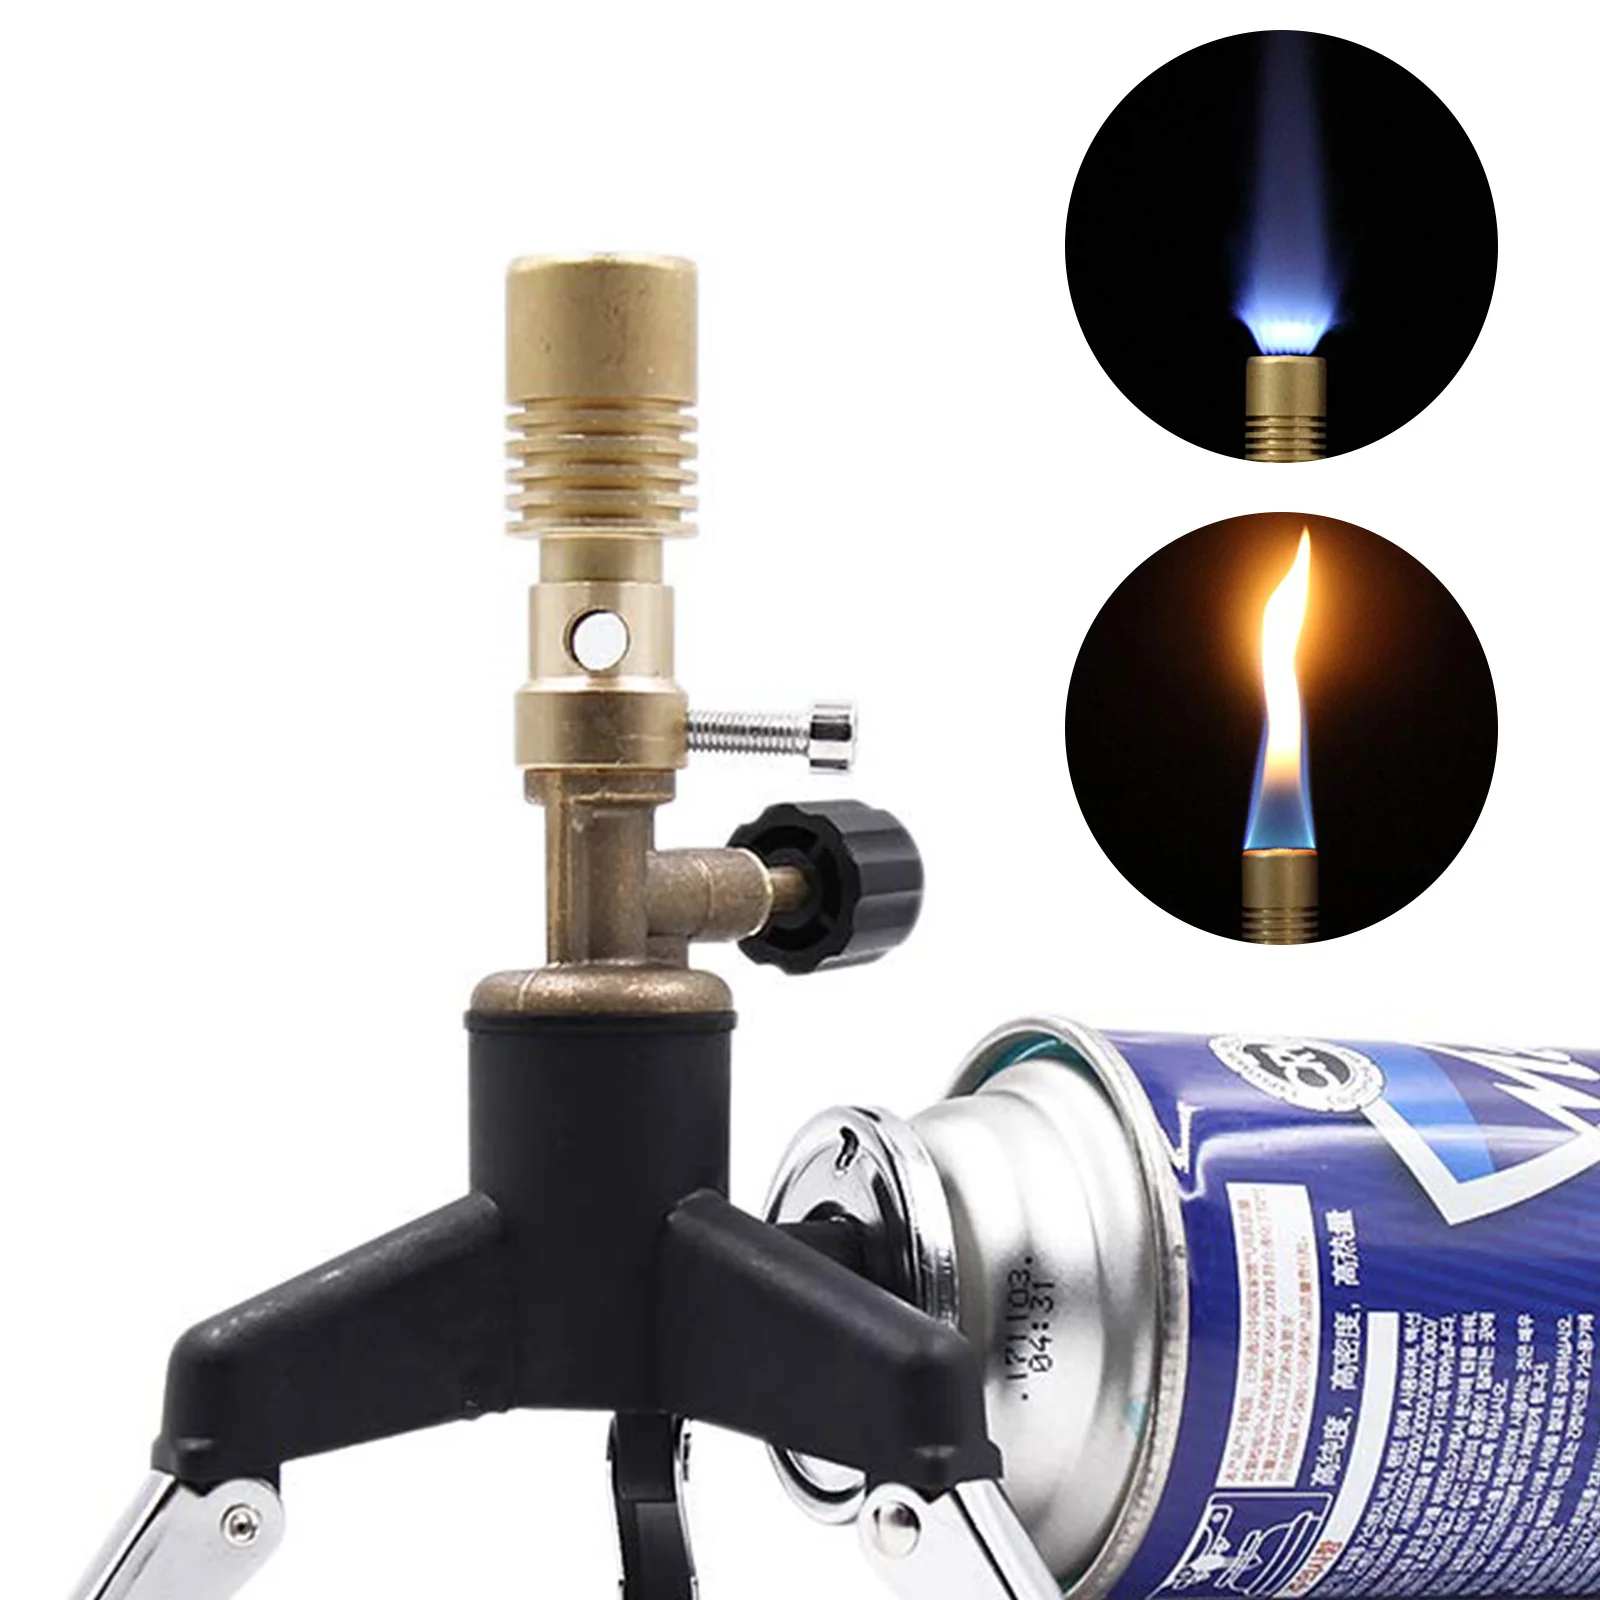 

Blowtorch Outdoor Gas Burner Mini Bunsen Laboratory Tool Camping Head Heating Brass Portable Multifunction Travel Adjustment